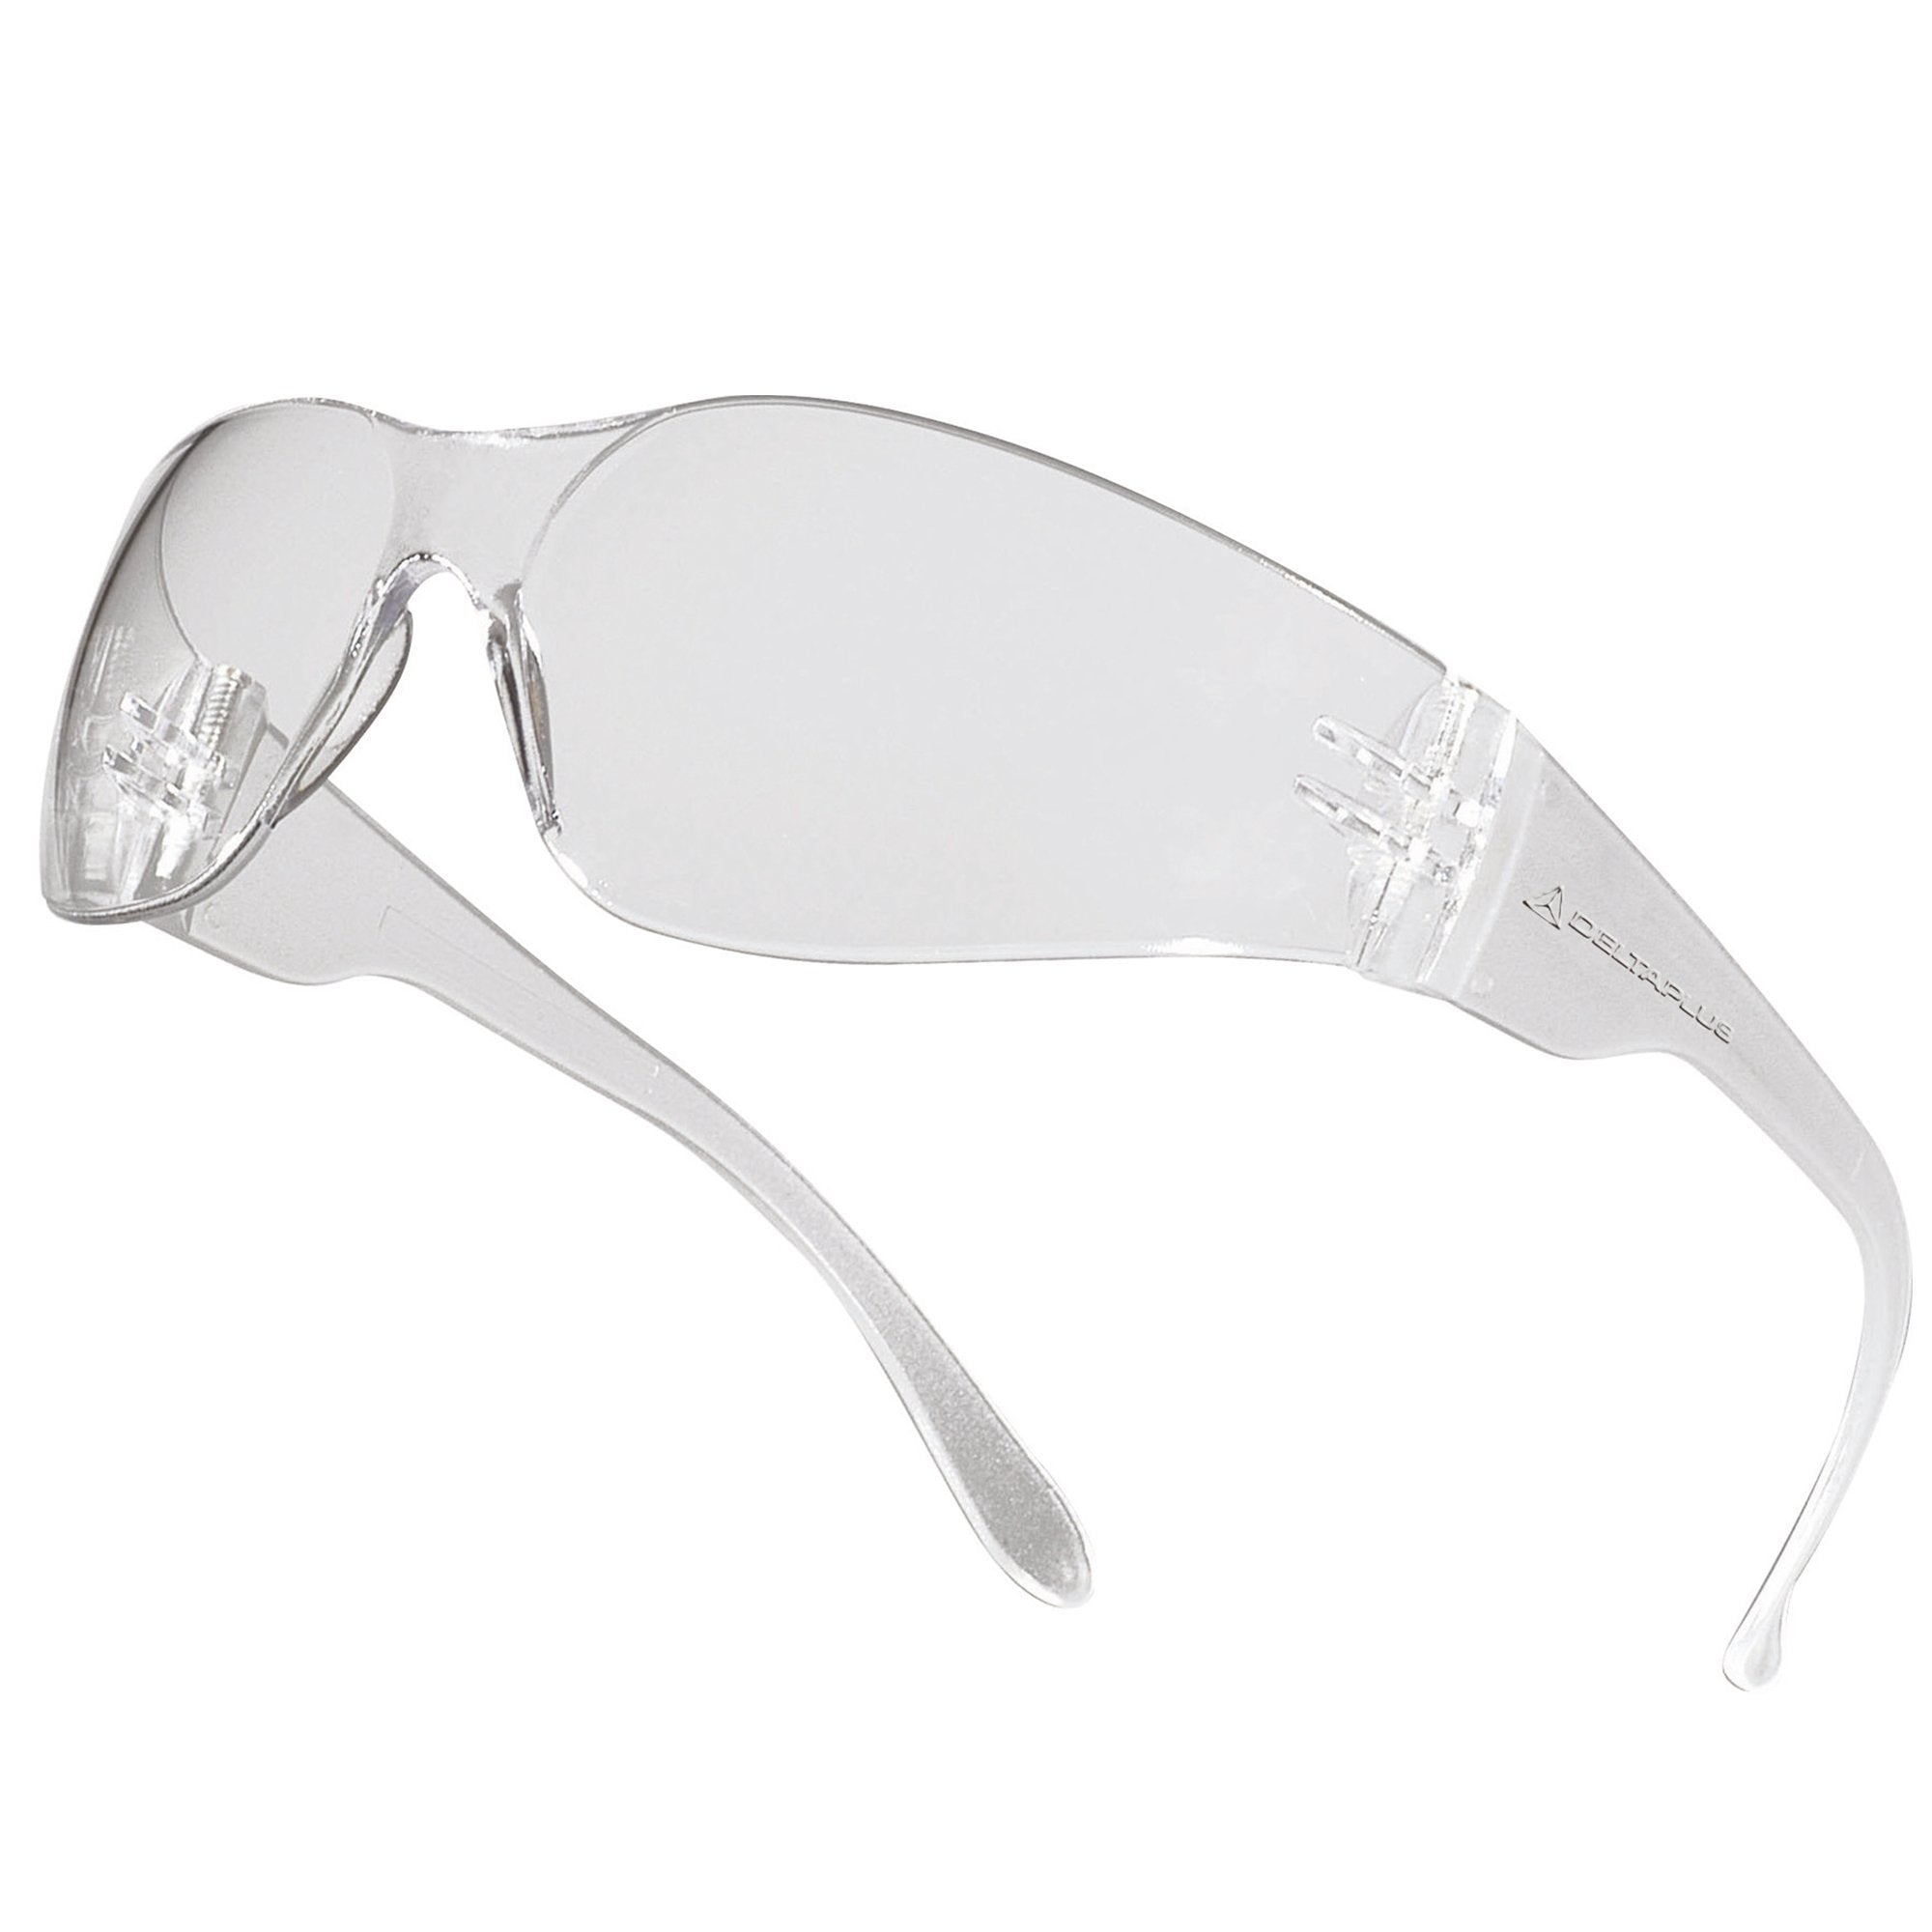 deltaplus-occhiali-policarbonato-brava2-lente-antiappanamento